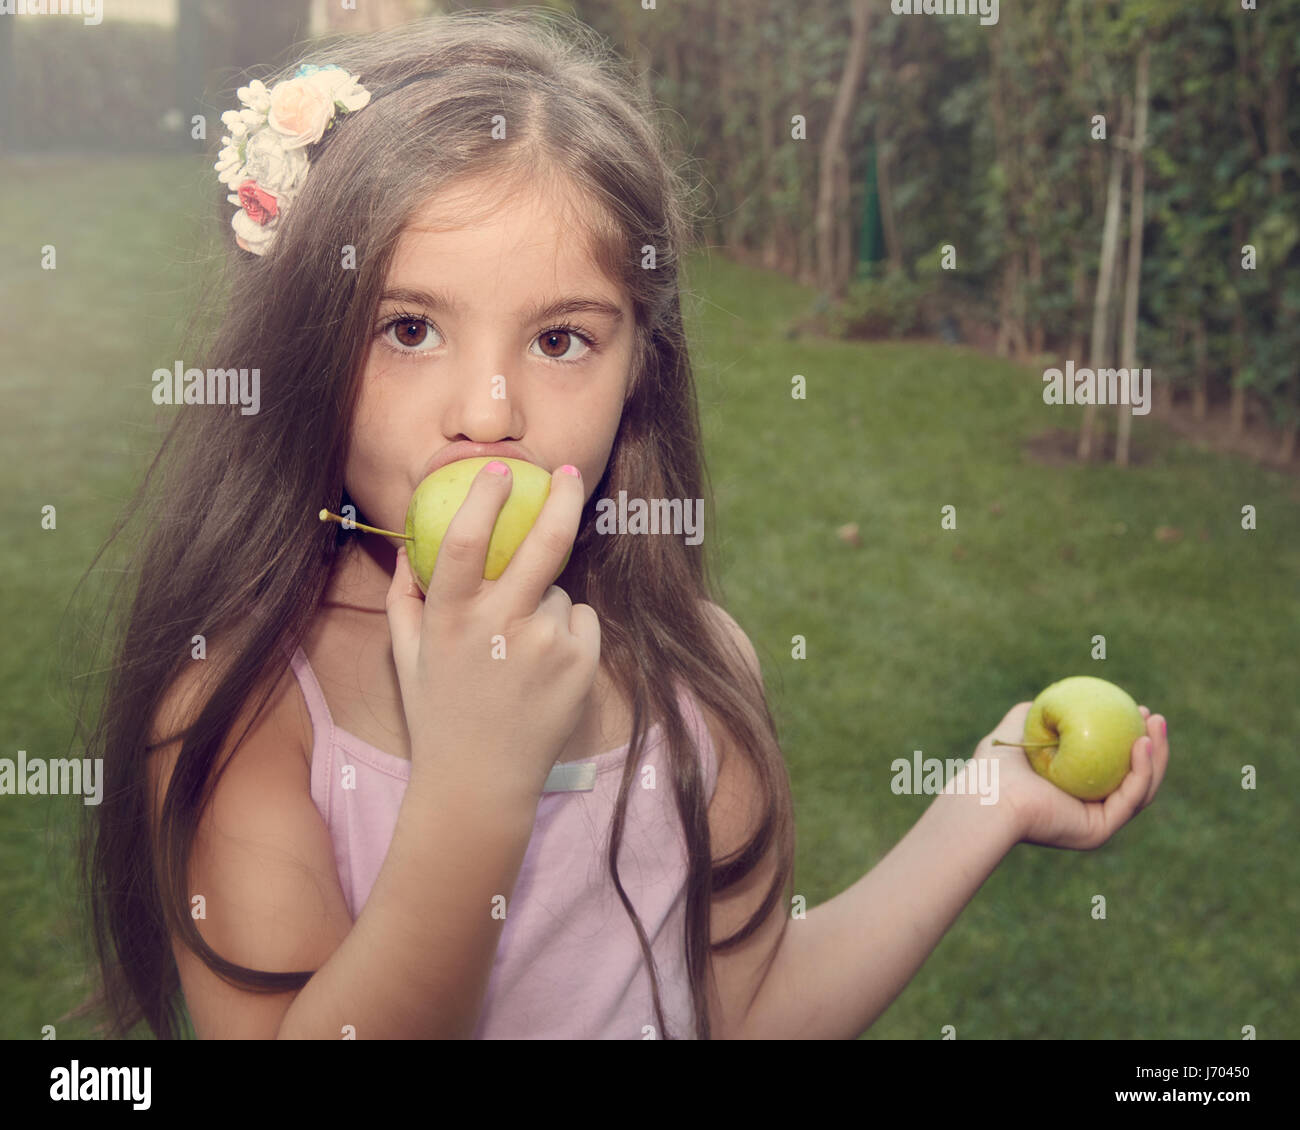 Child eating apple Stock Photo